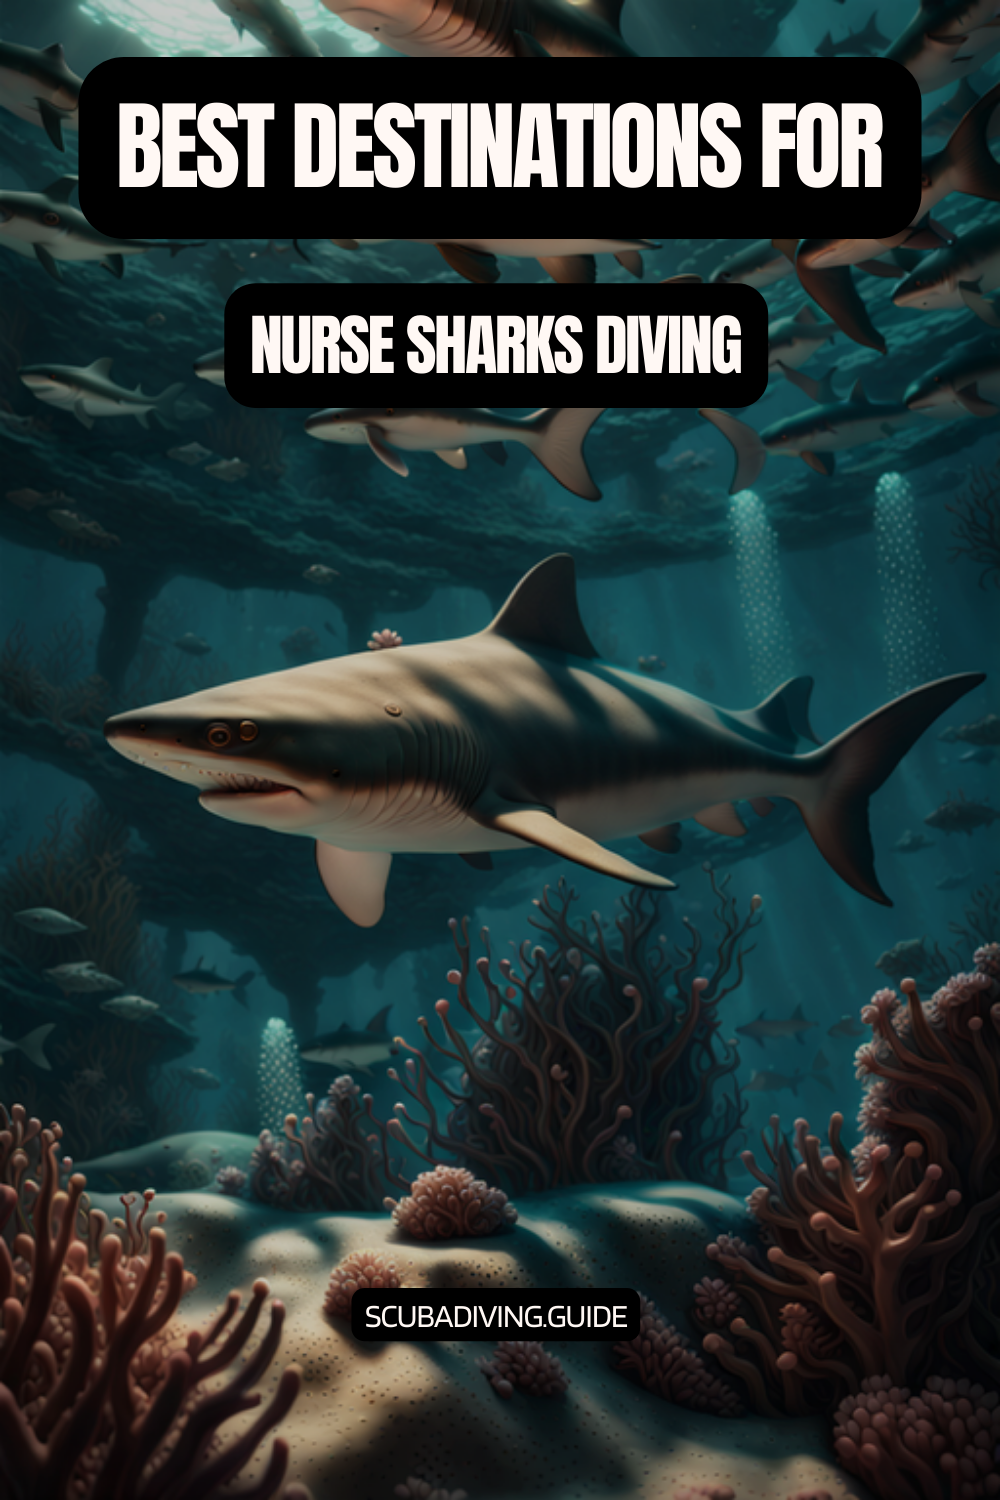 Best Destinations for Diving with Nurse Sharks